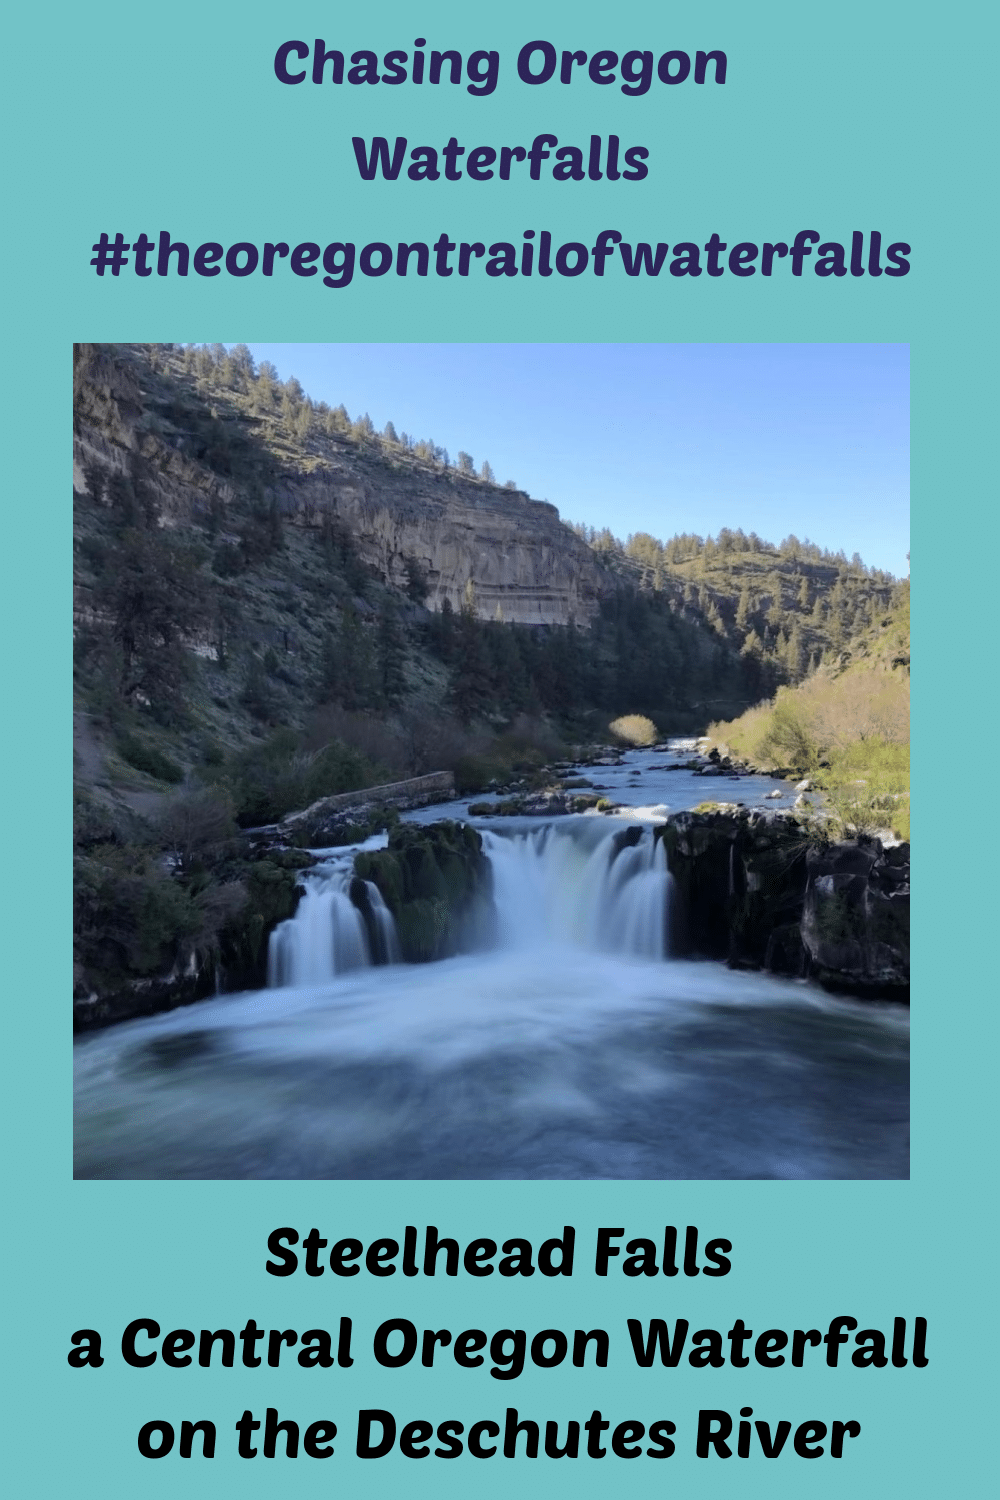 Pinterest Pin of Steelhead Falls in Central Oregon